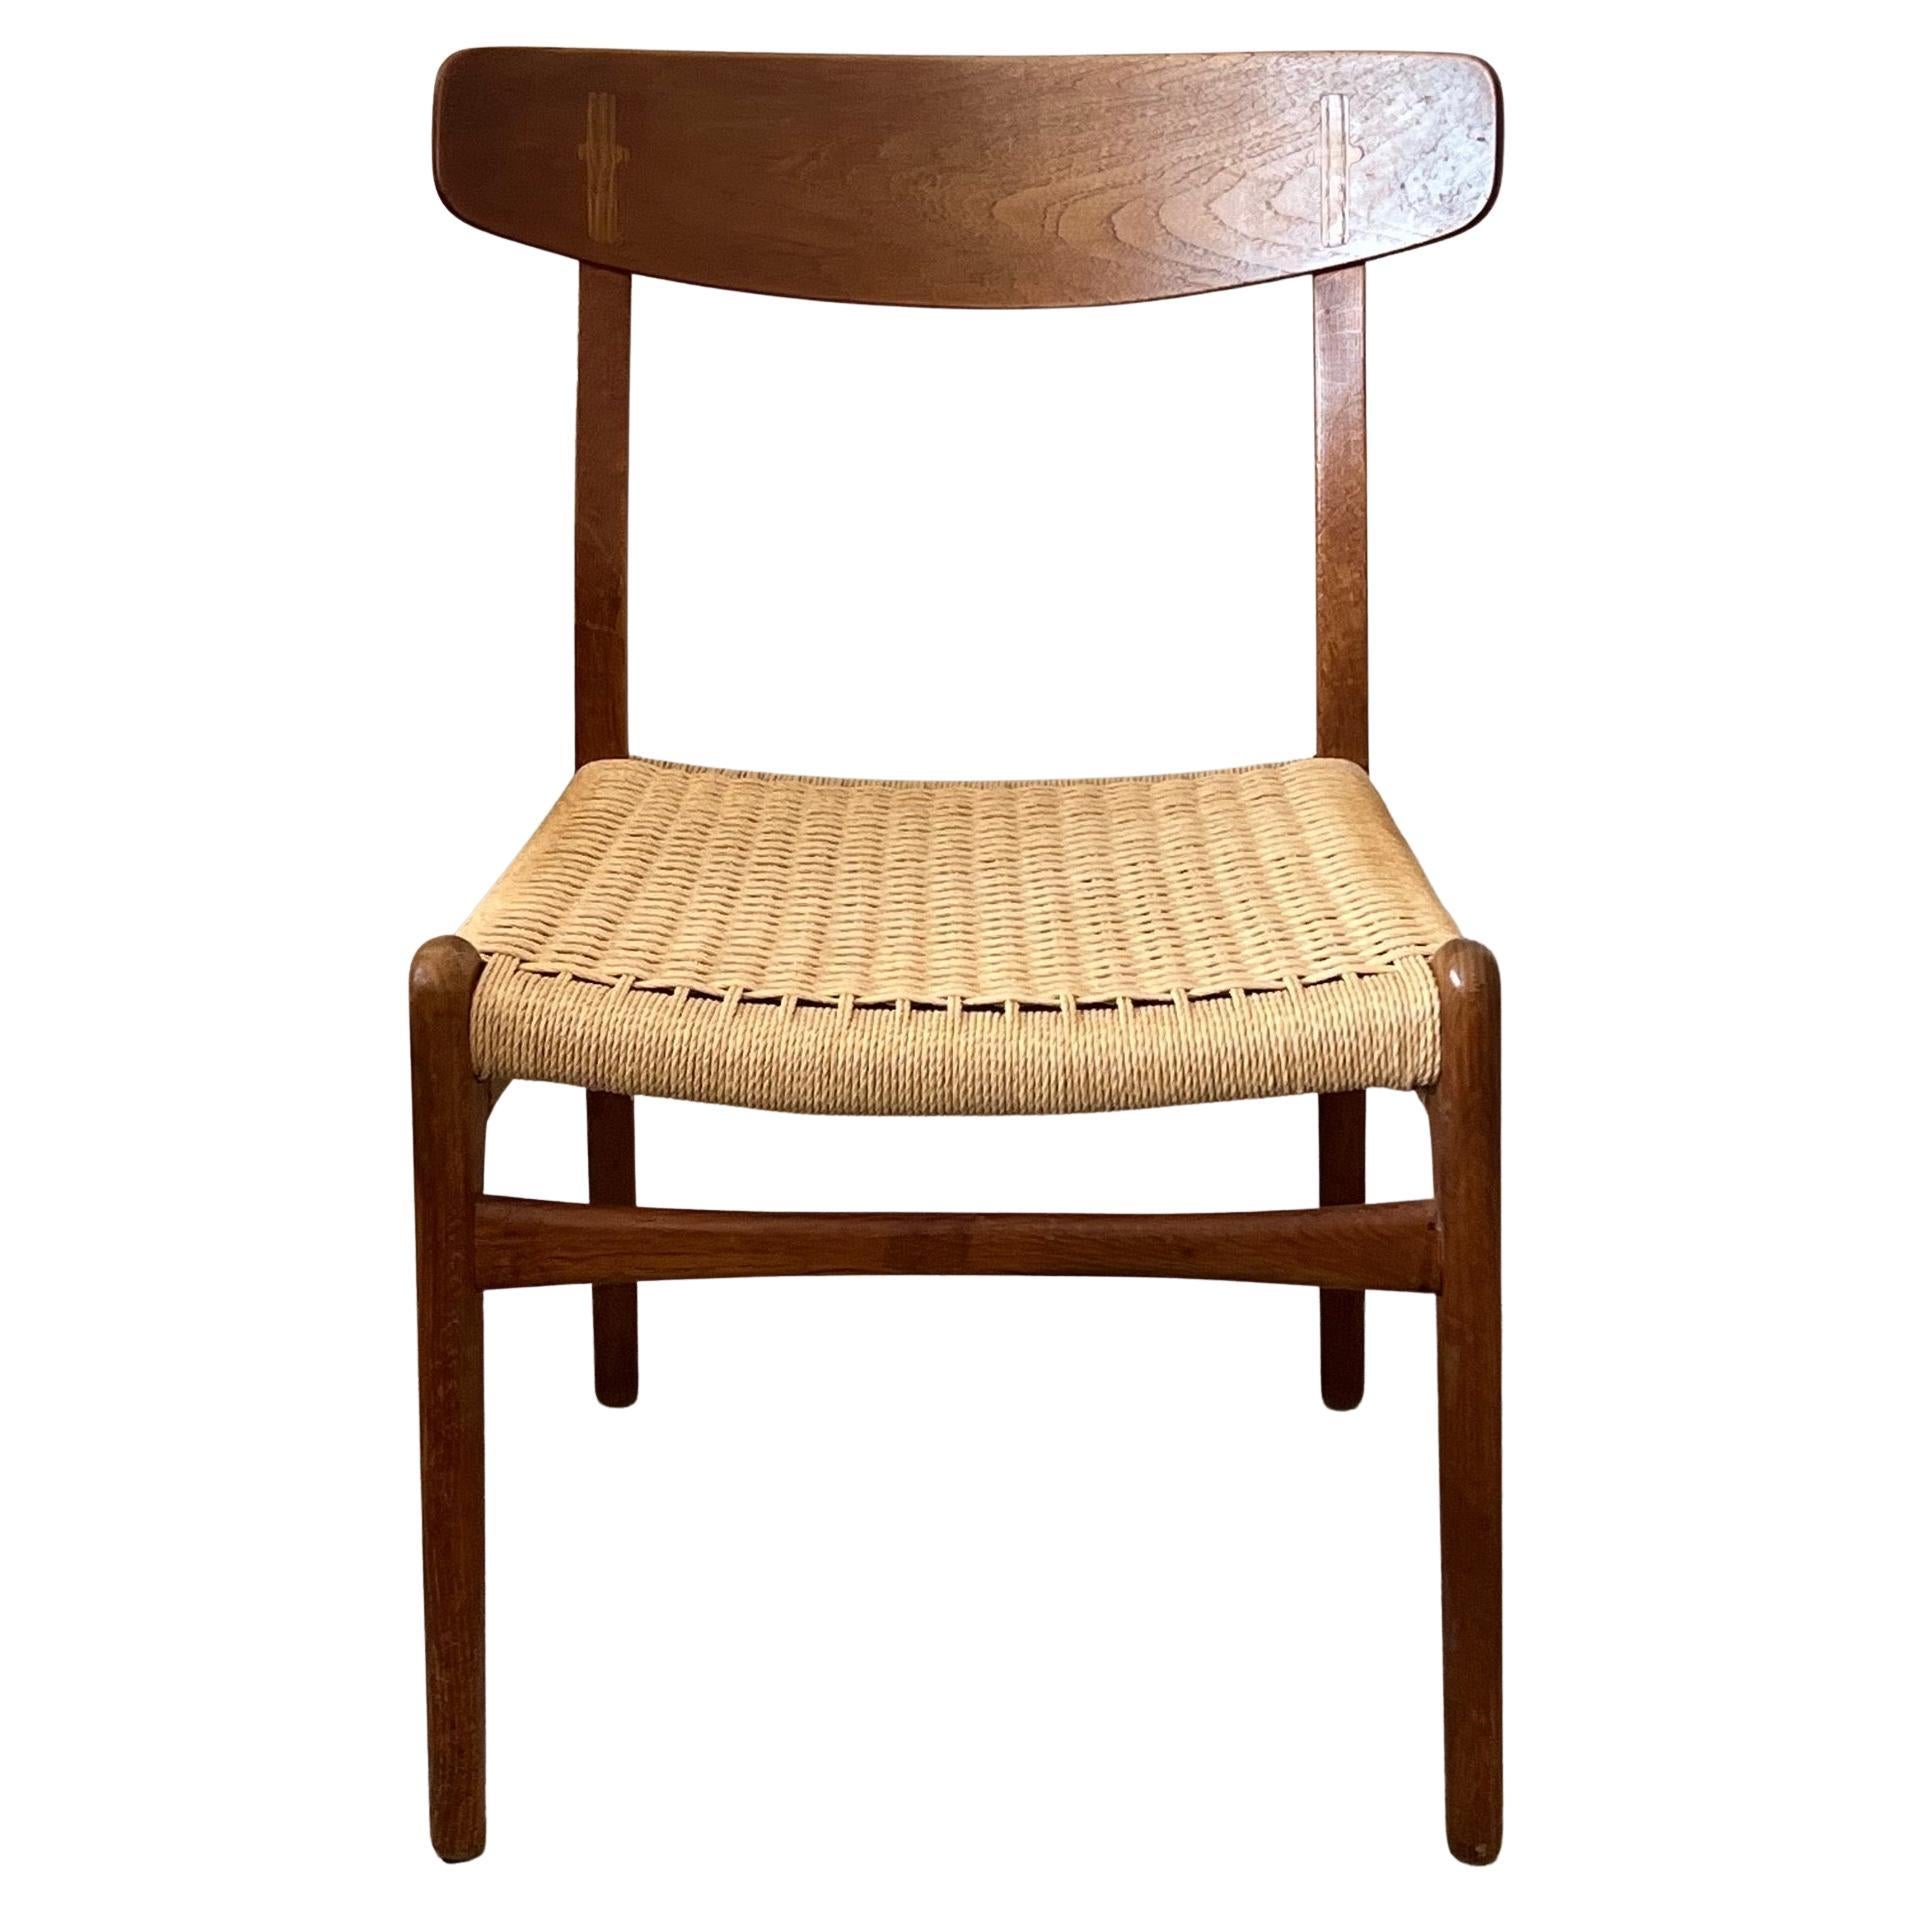 Original Hans Wegner CH 23 Chair For Sale